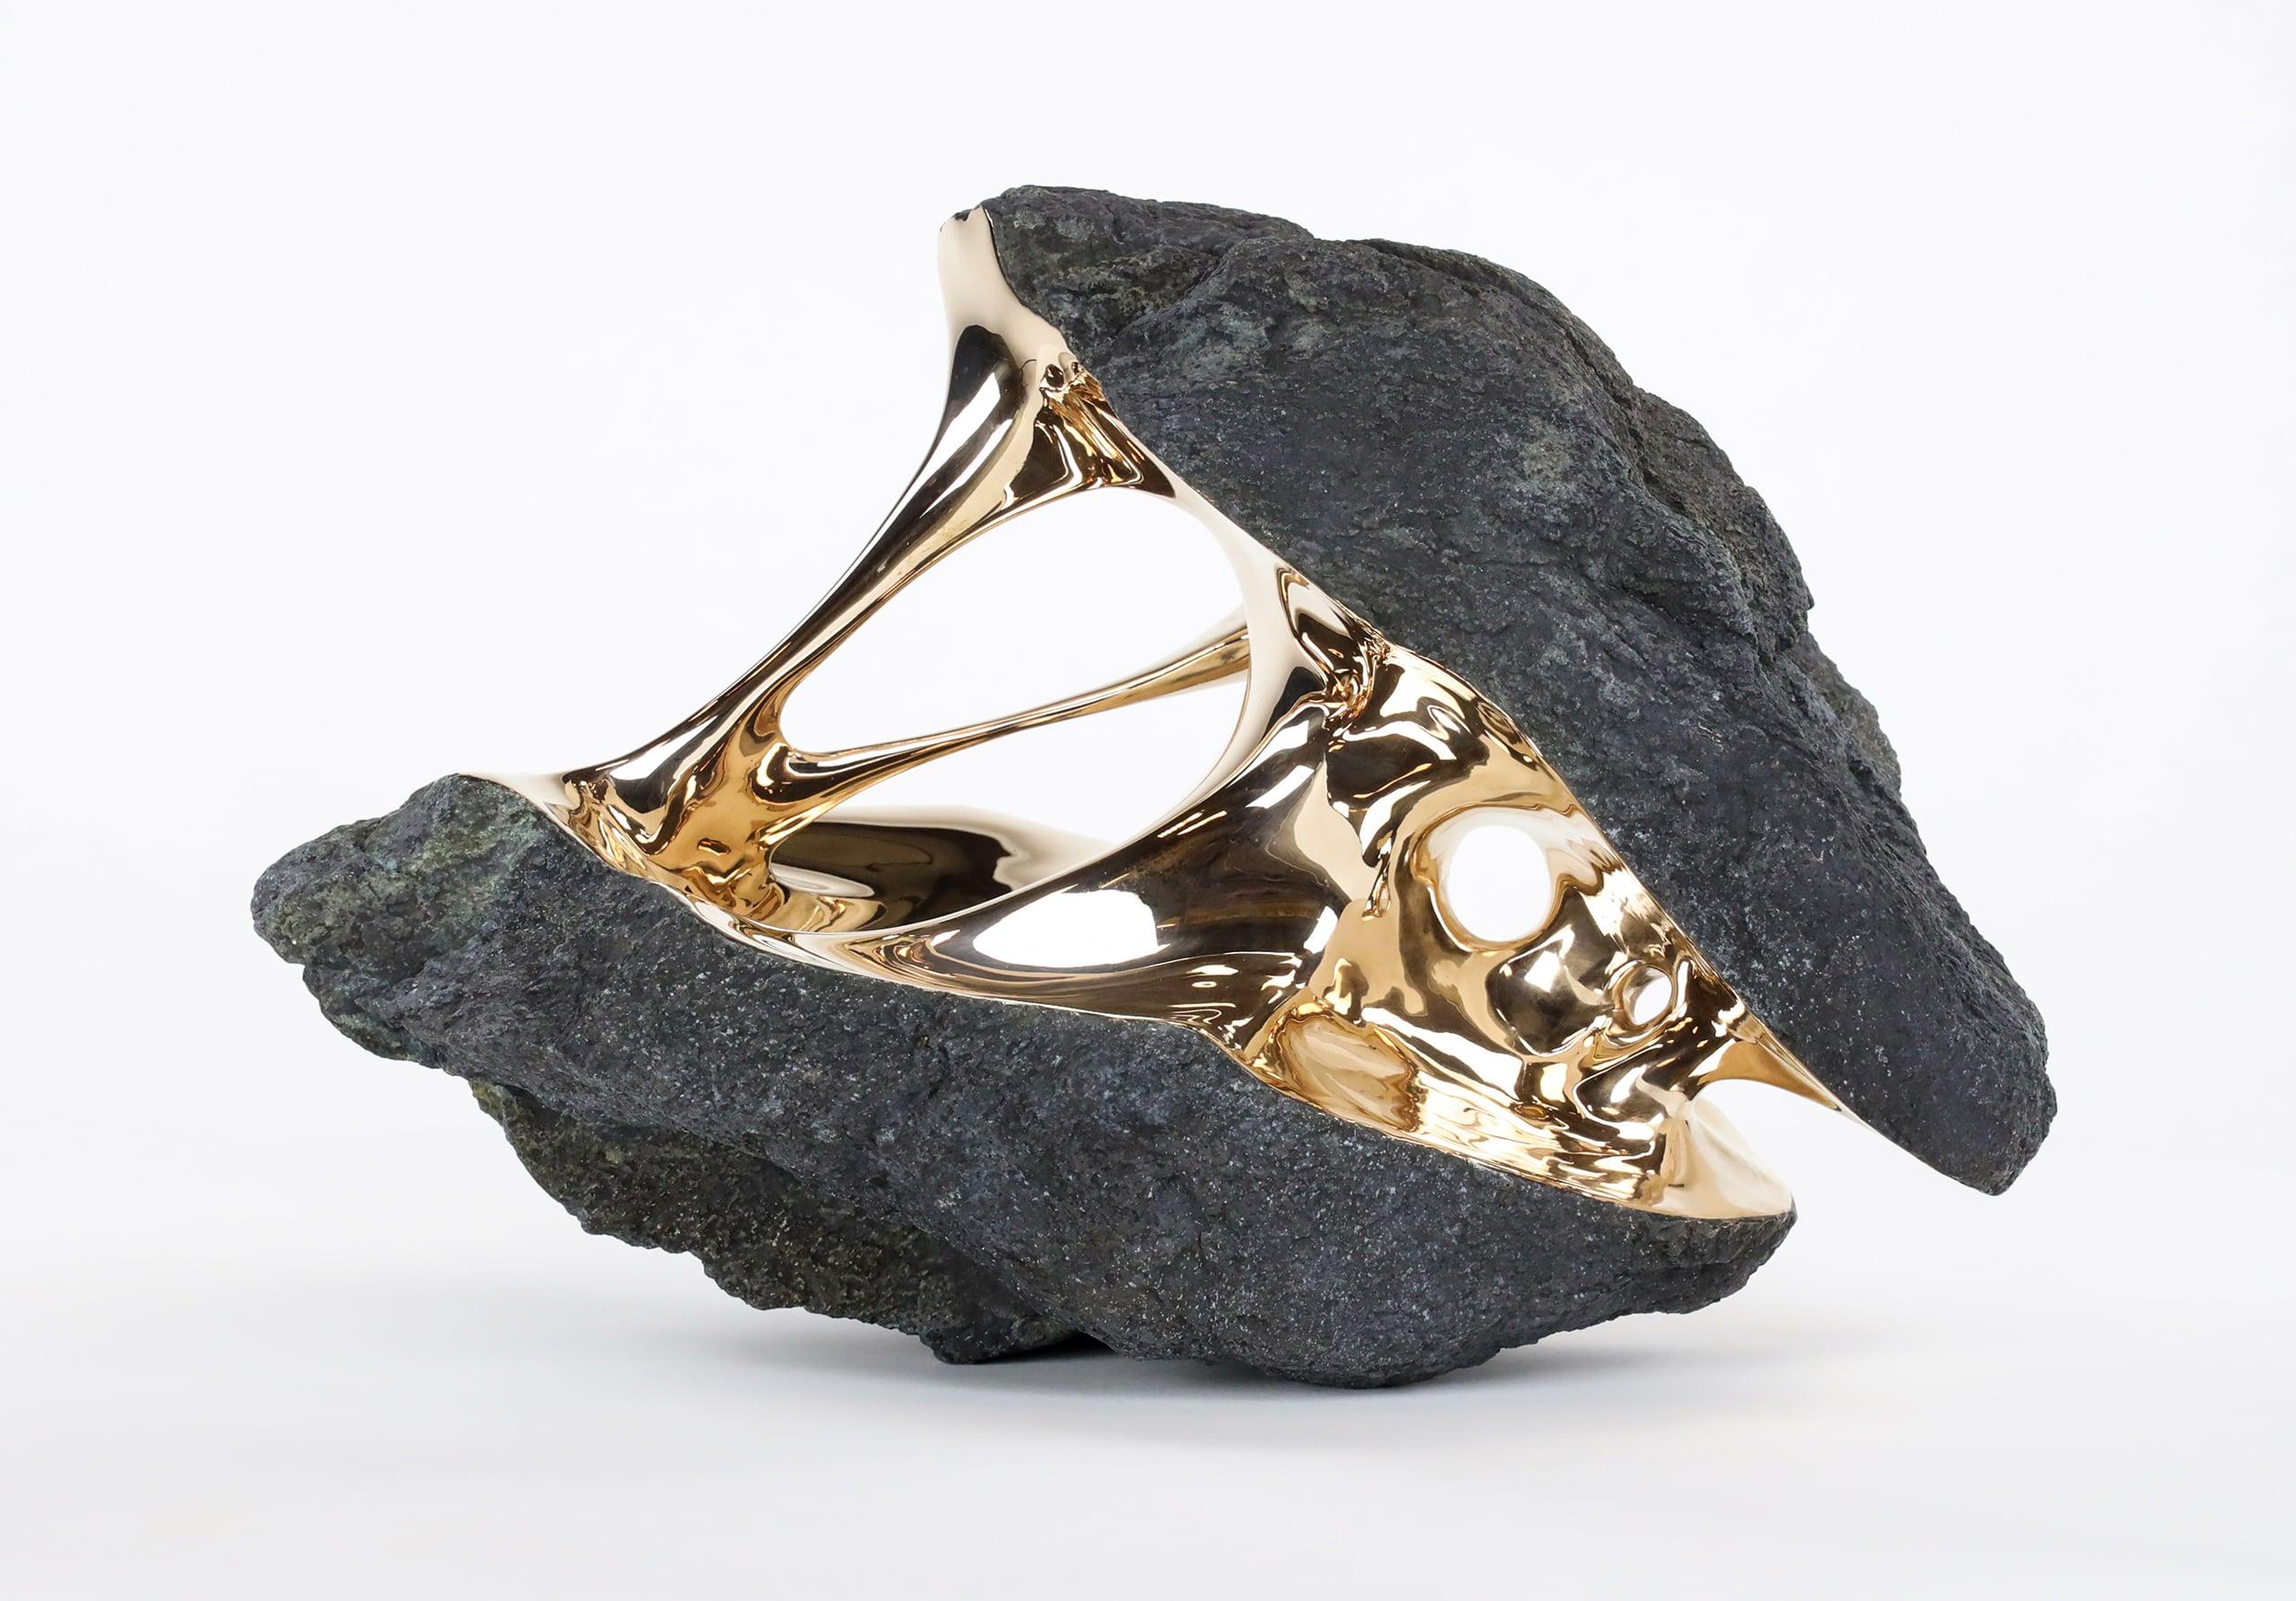 Romain Langlois Abstract Sculpture - Gravity - Rock-like bronze sculpture